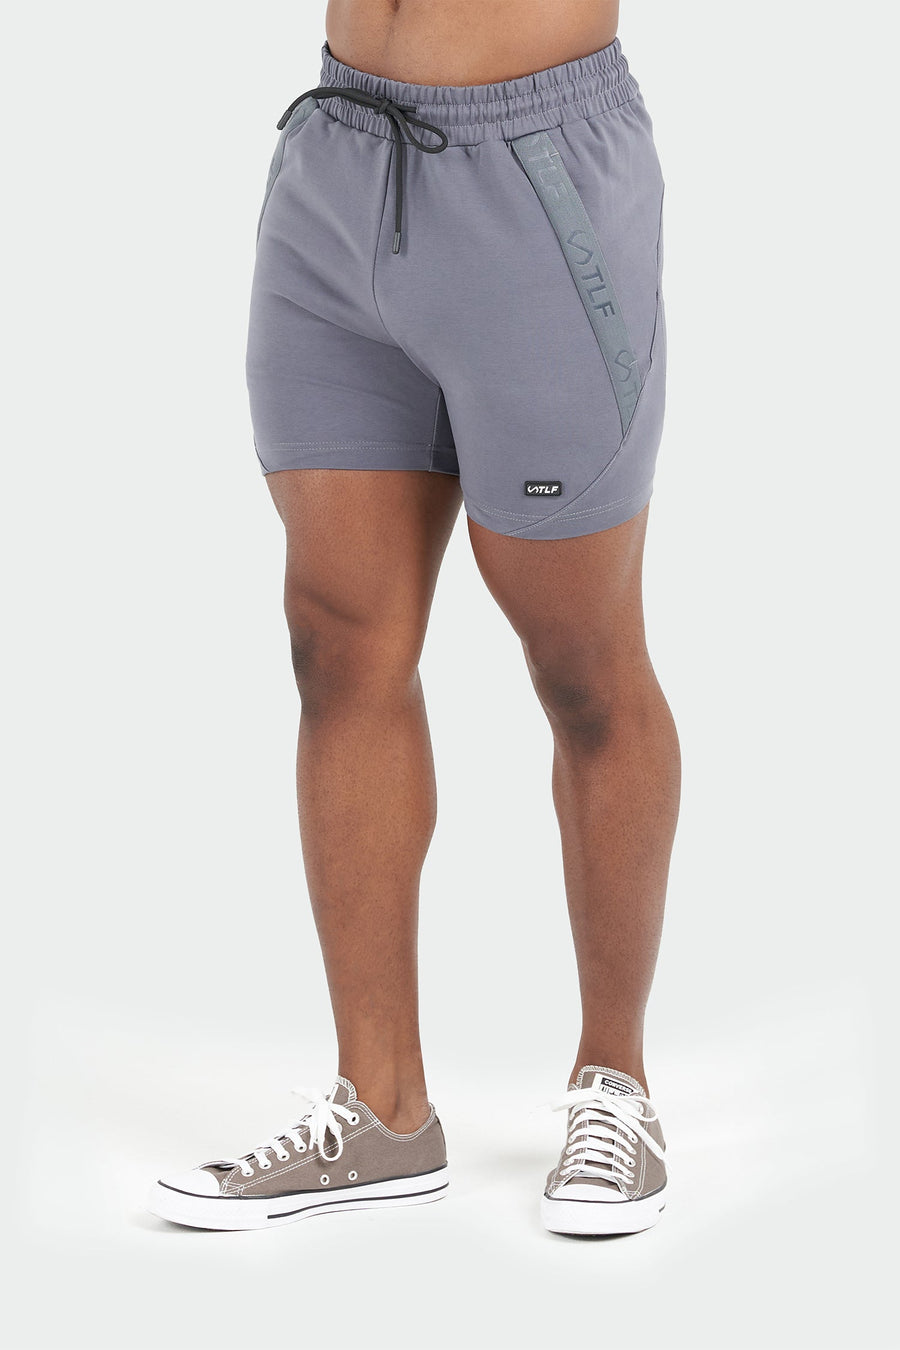 TLF Vital 5” Shorts - 5 Inch Inseam Shorts For Men – Gray - 1